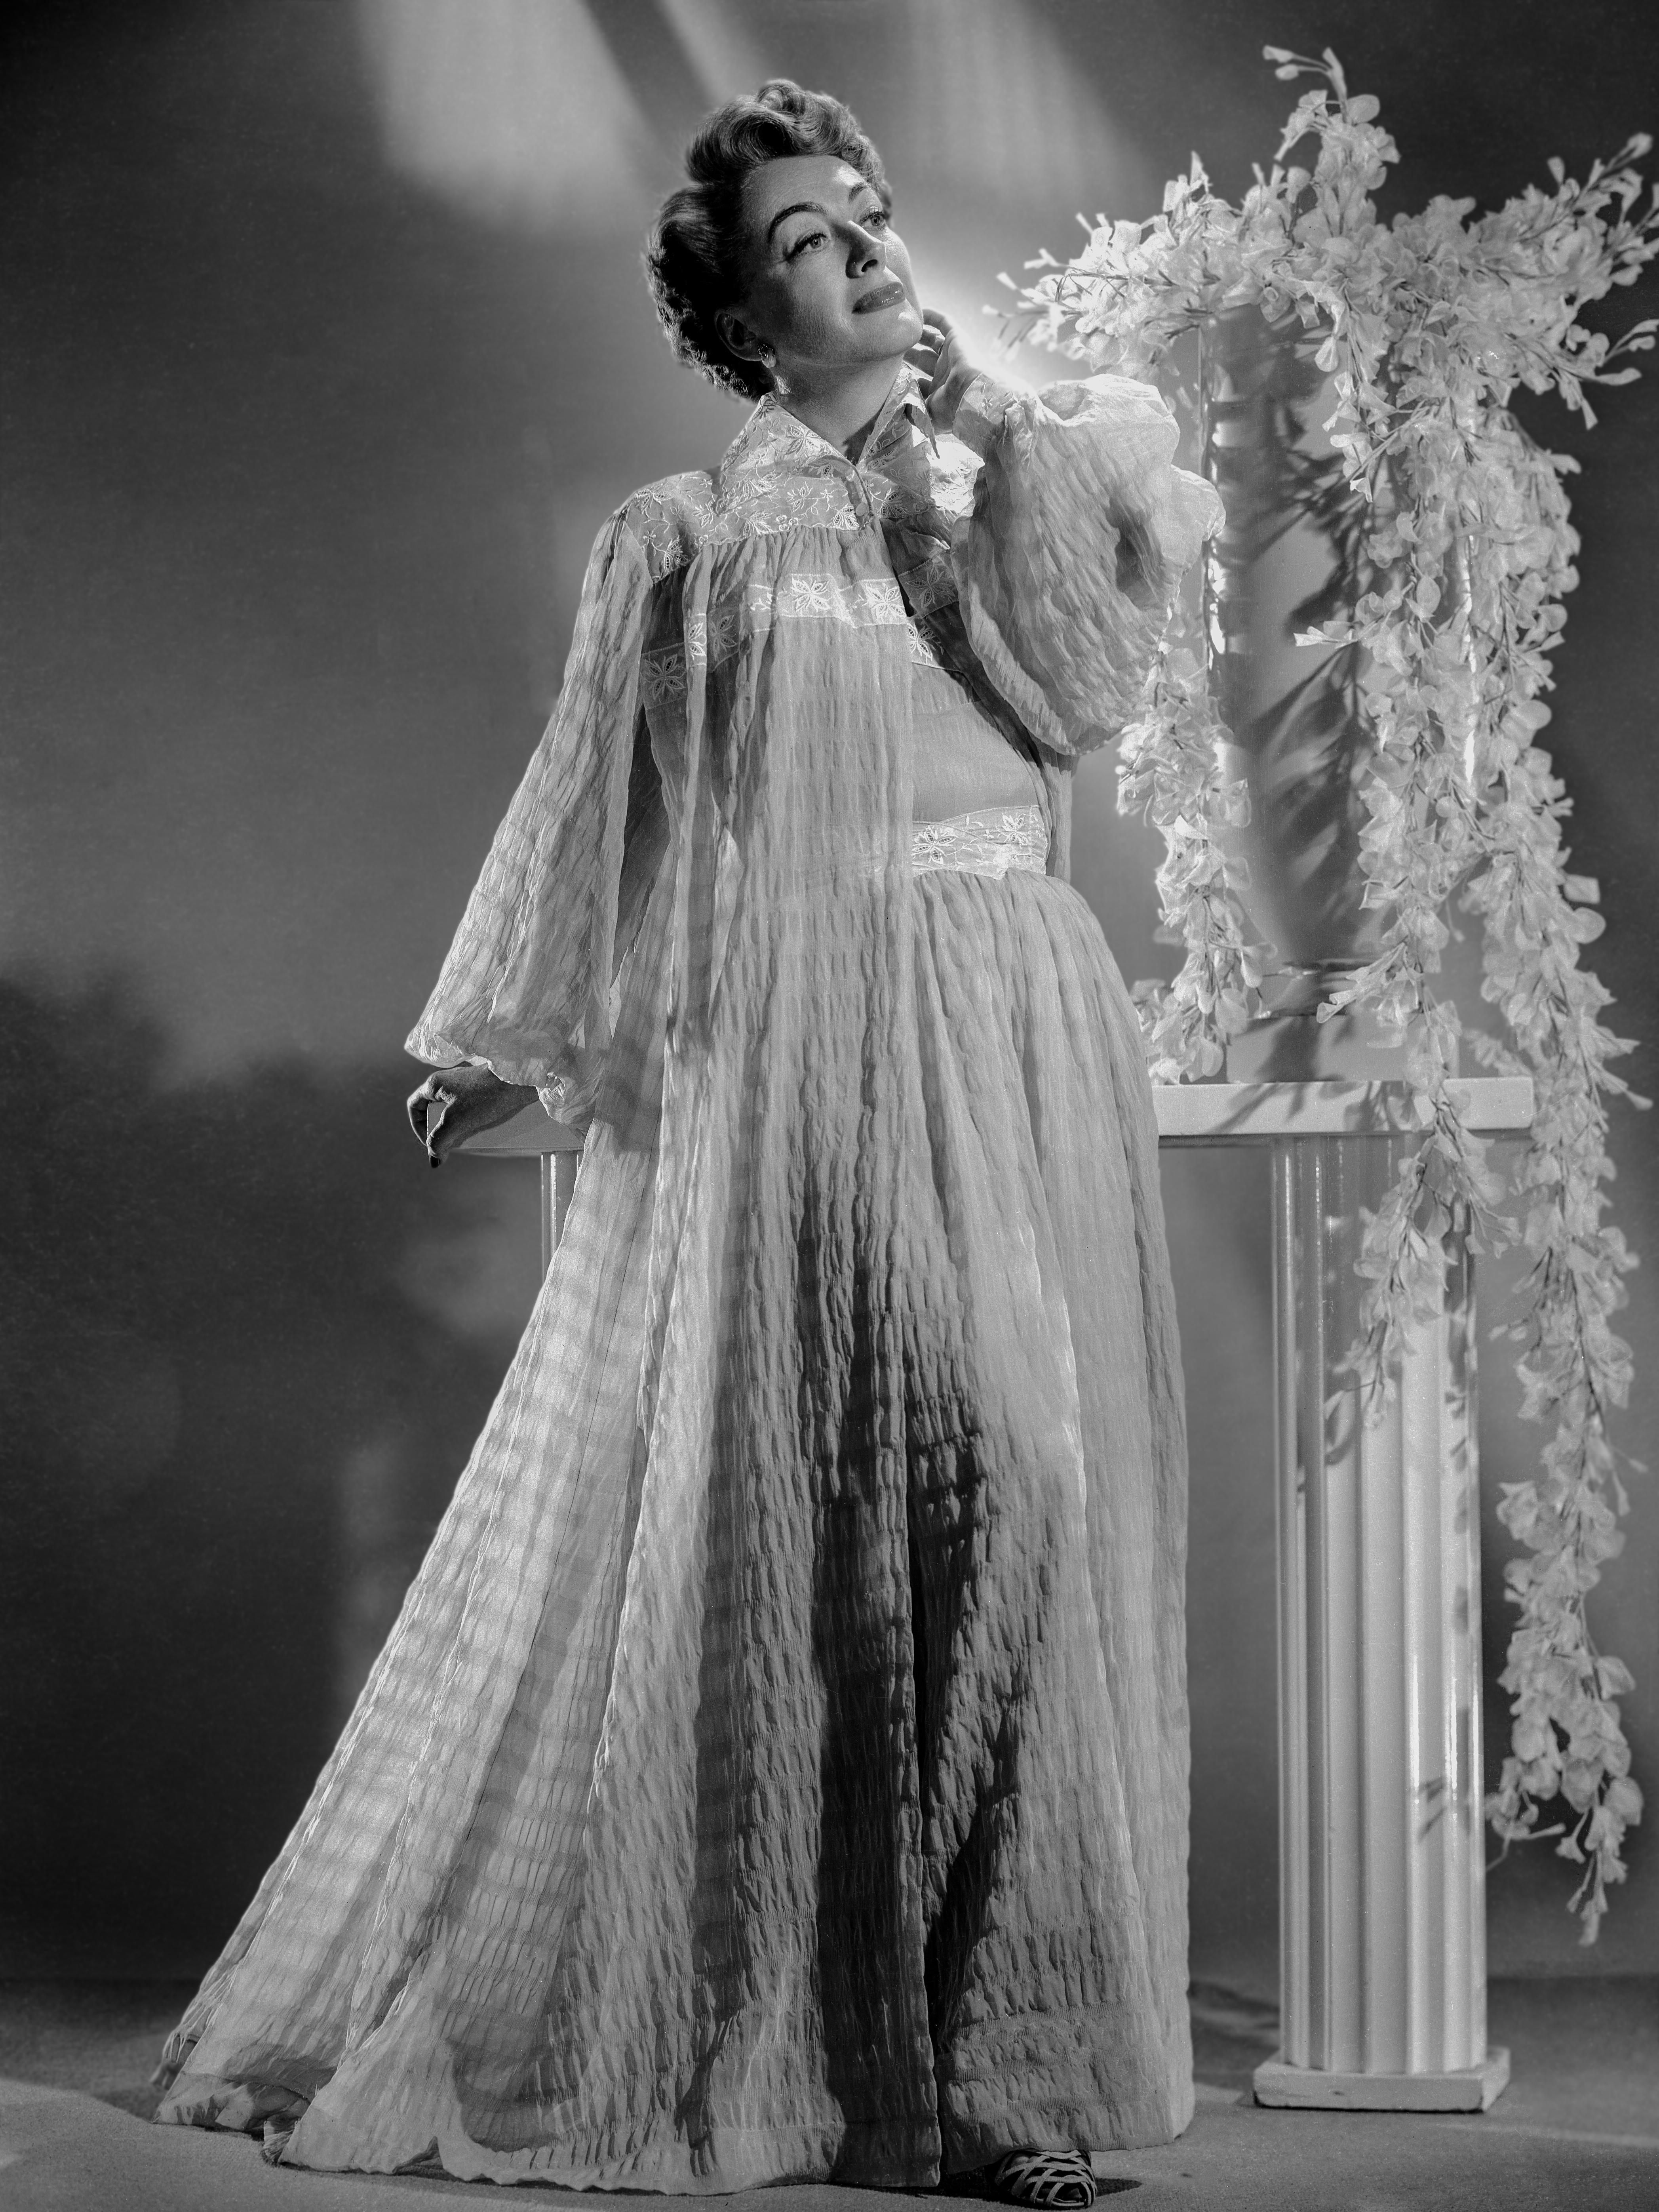 Bert Six Portrait Photograph - Joan Crawford in Sheer Gown Movie Star News Fine Art Print